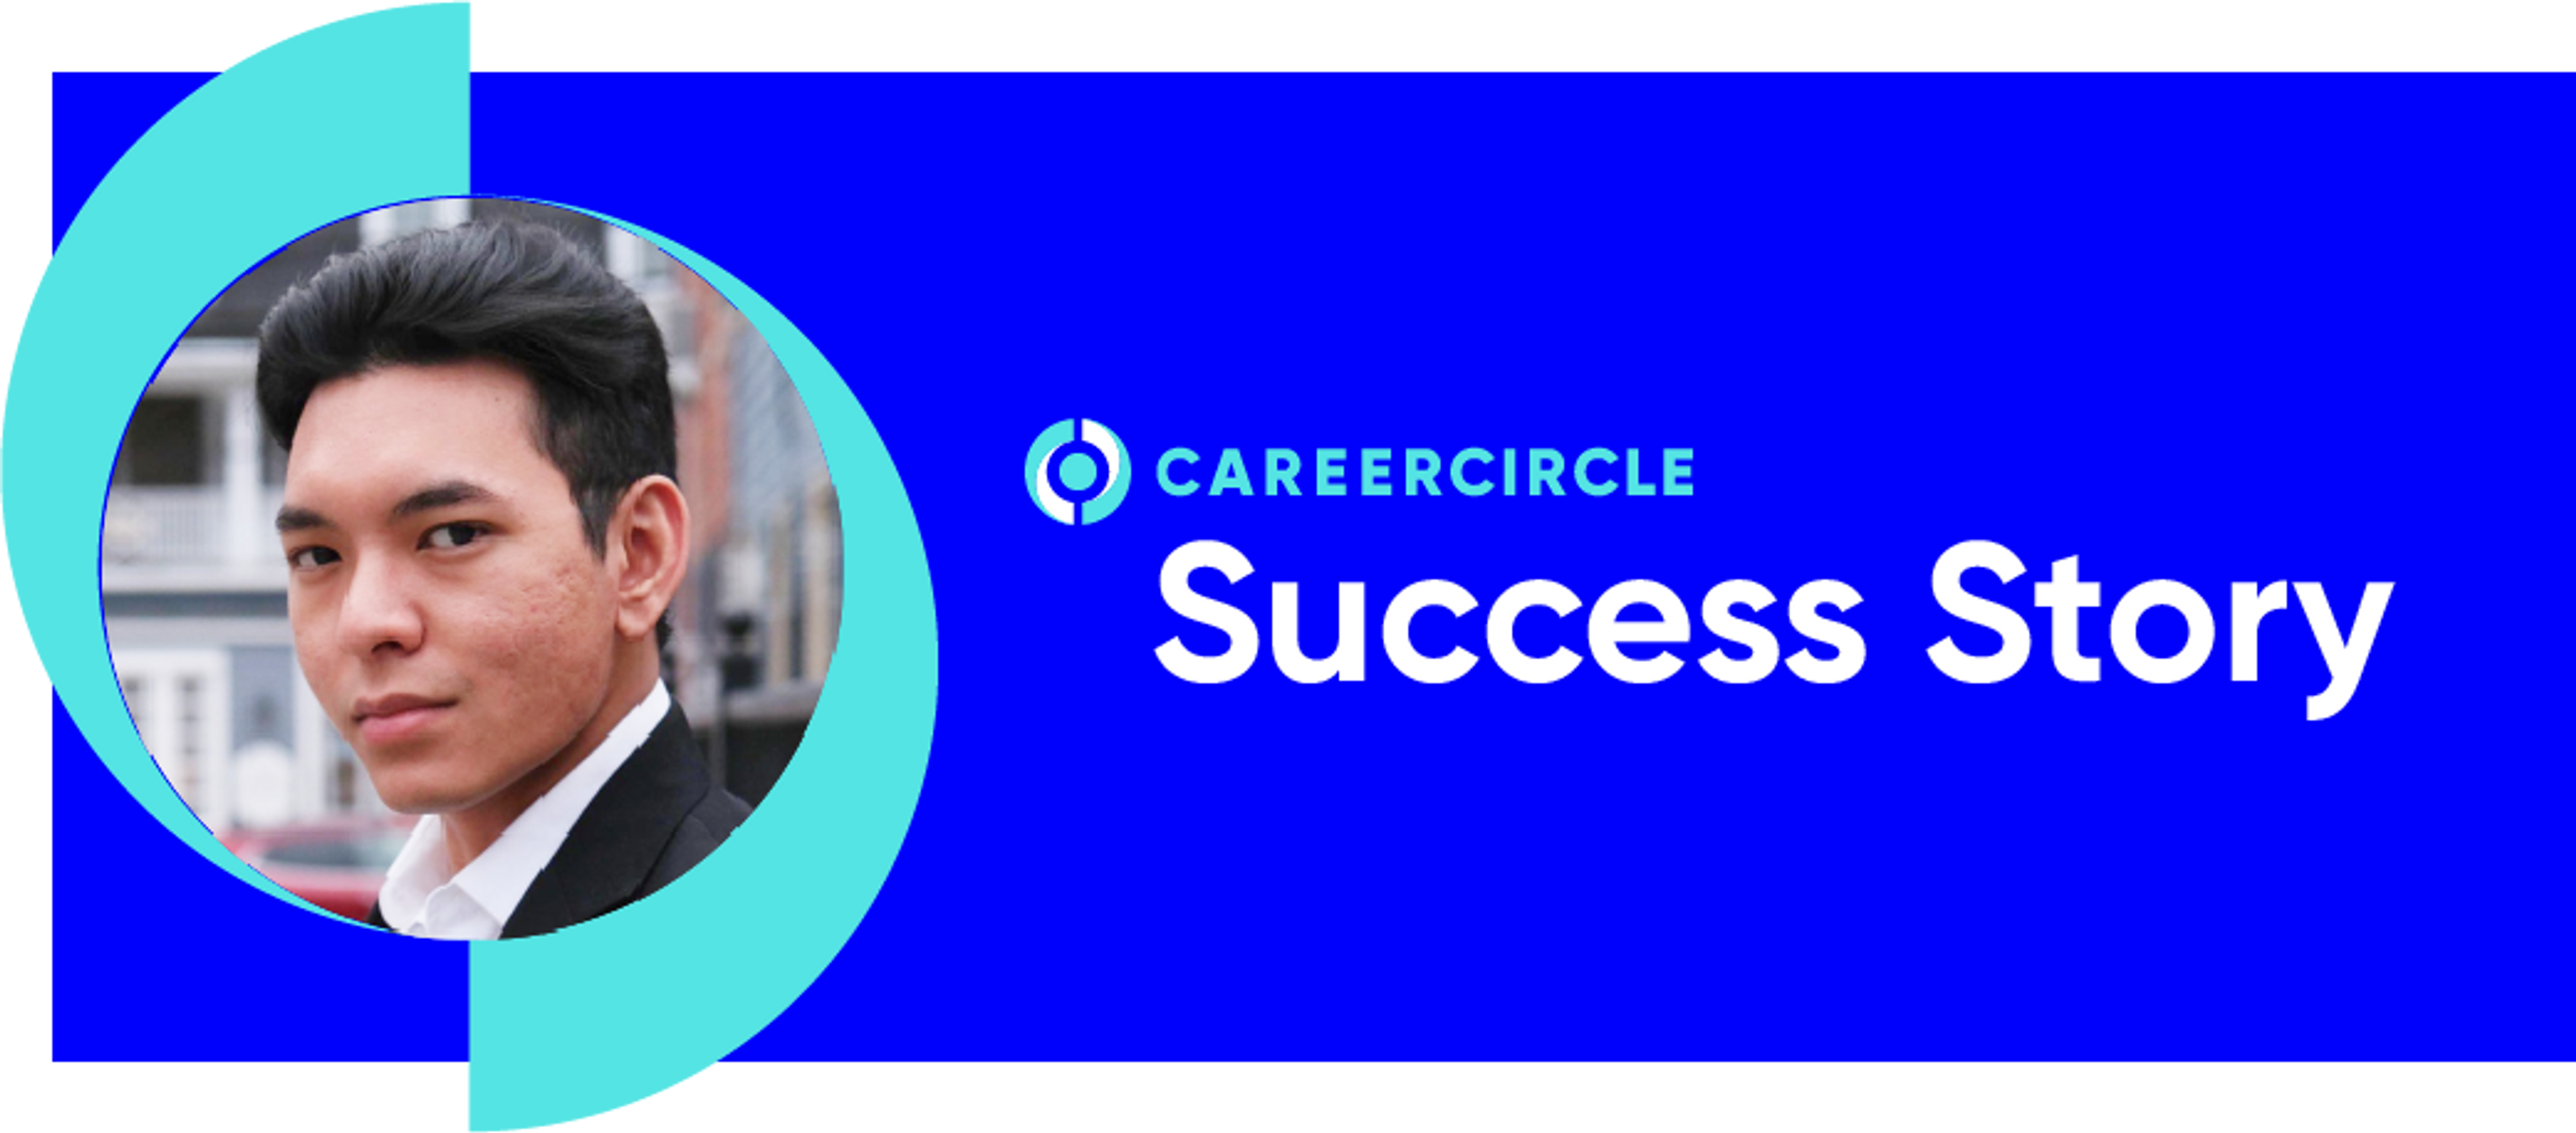 CareerCircle "Success Story" image of a CareerCircle member